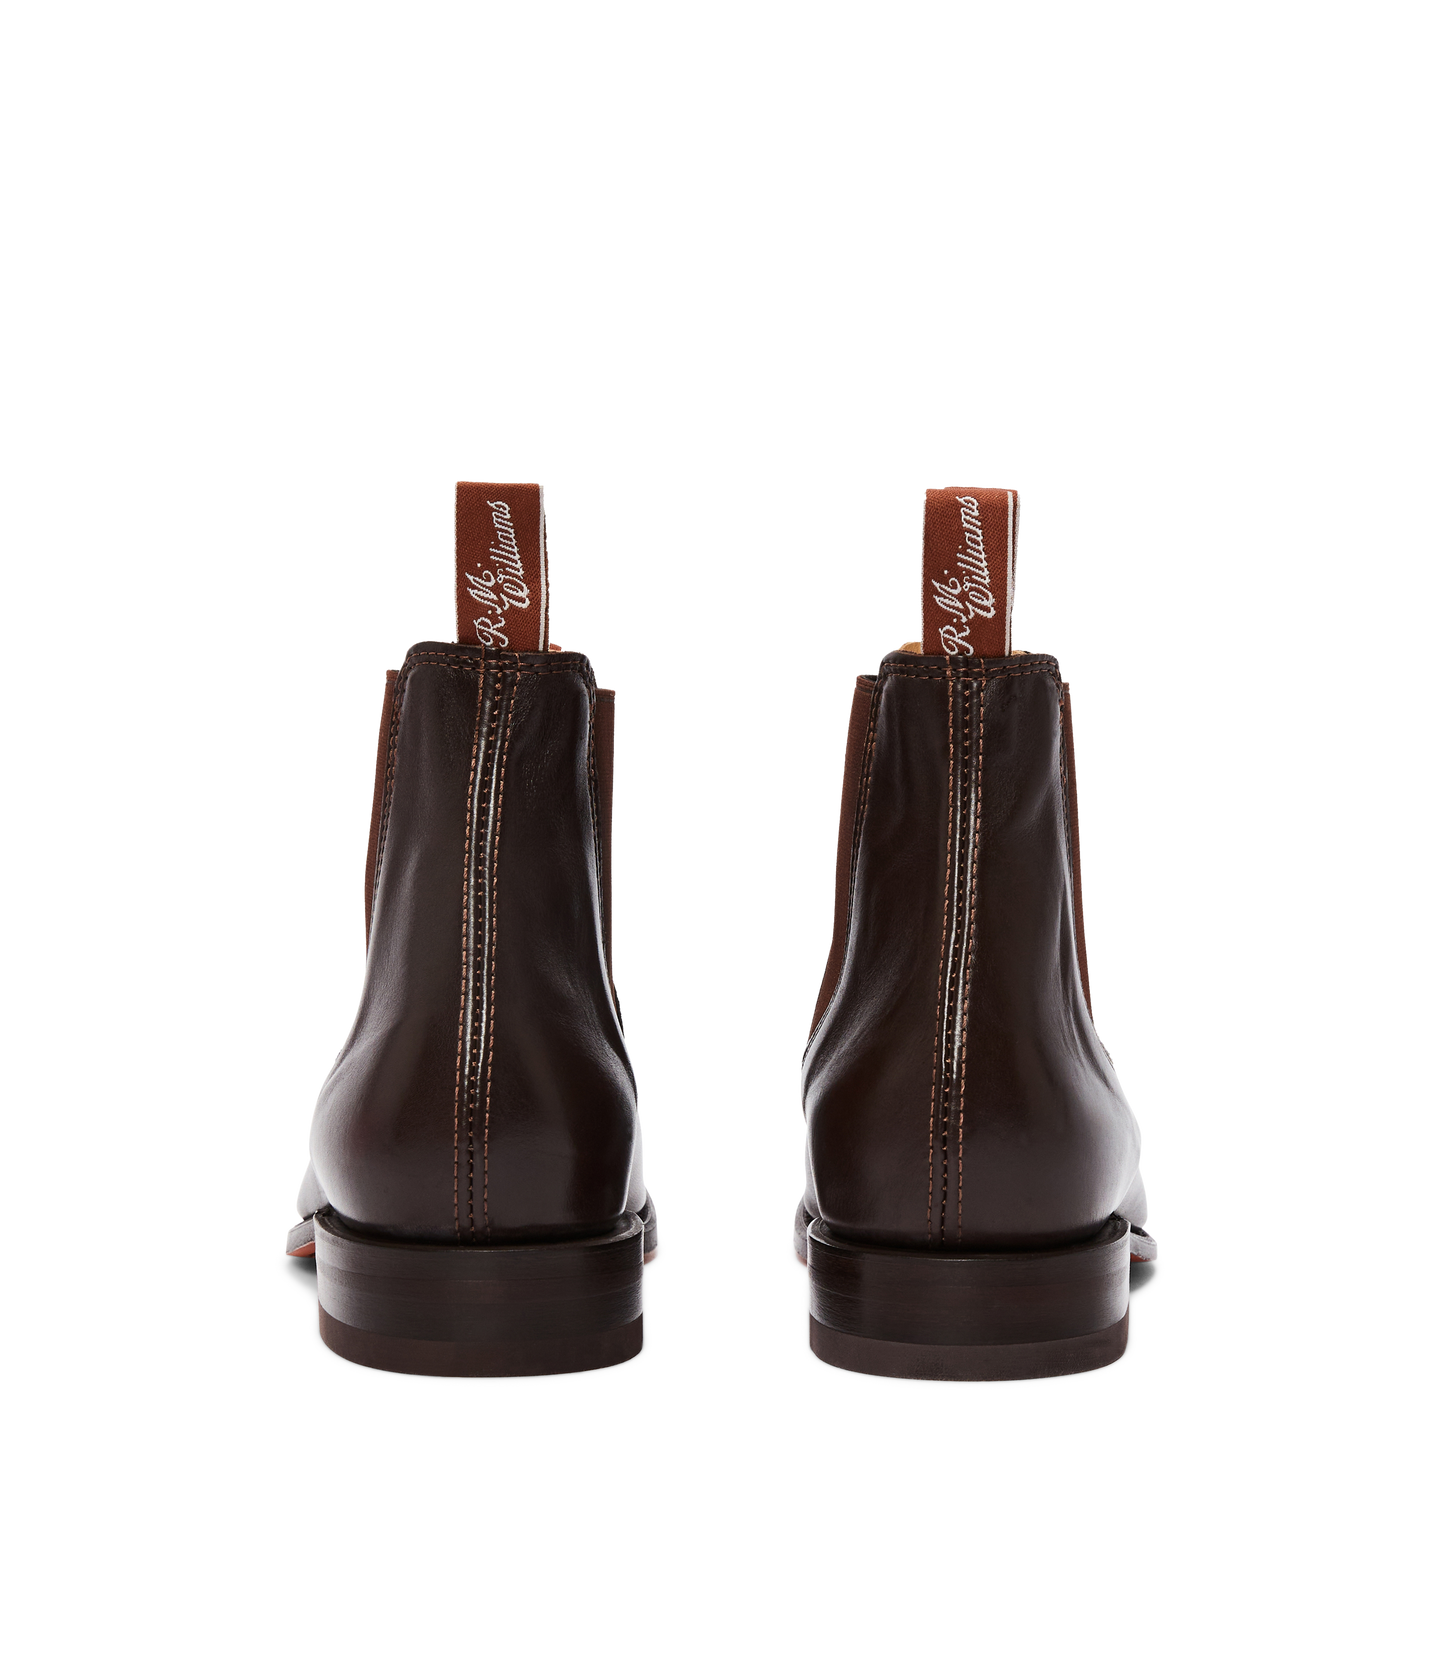 Craftsman boot - Kangaroo leather - Chestnut